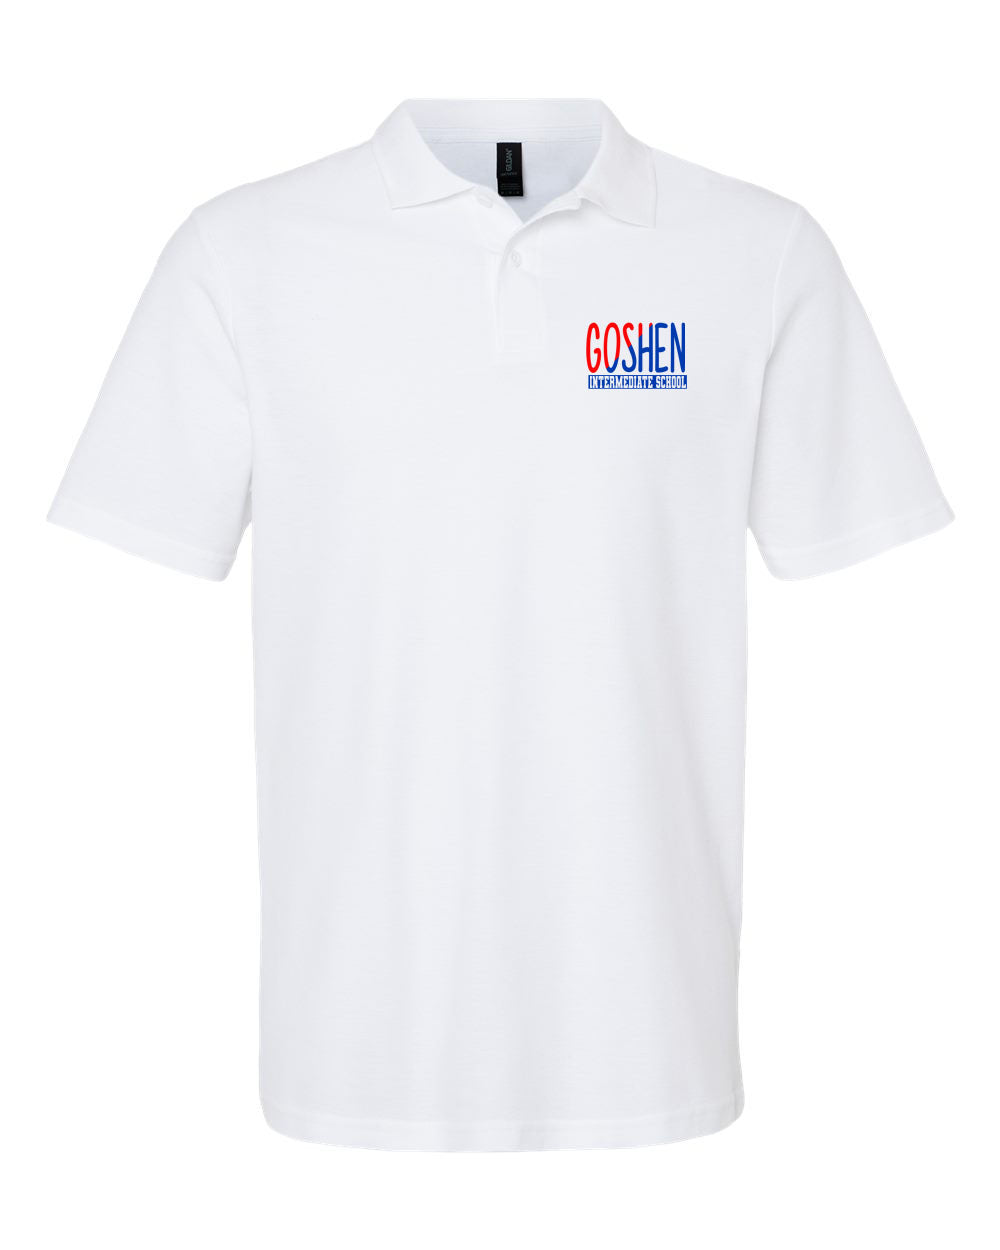 Goshen School Design 3 Polo T-Shirt